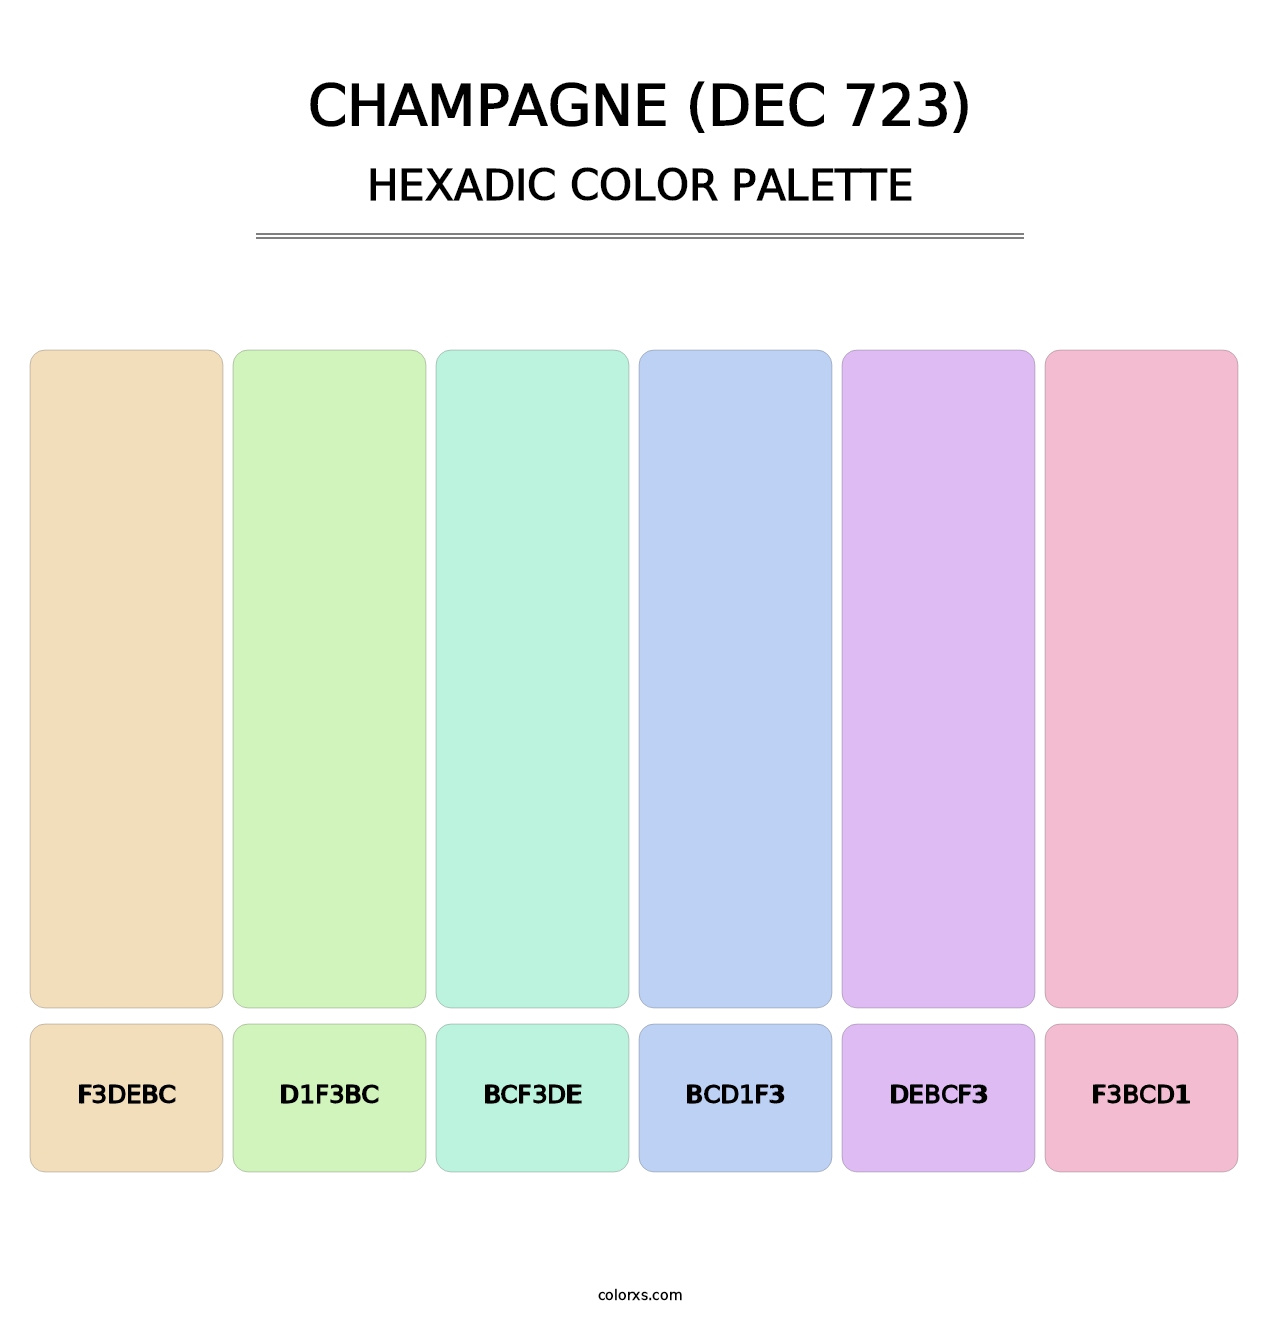 Champagne (DEC 723) - Hexadic Color Palette